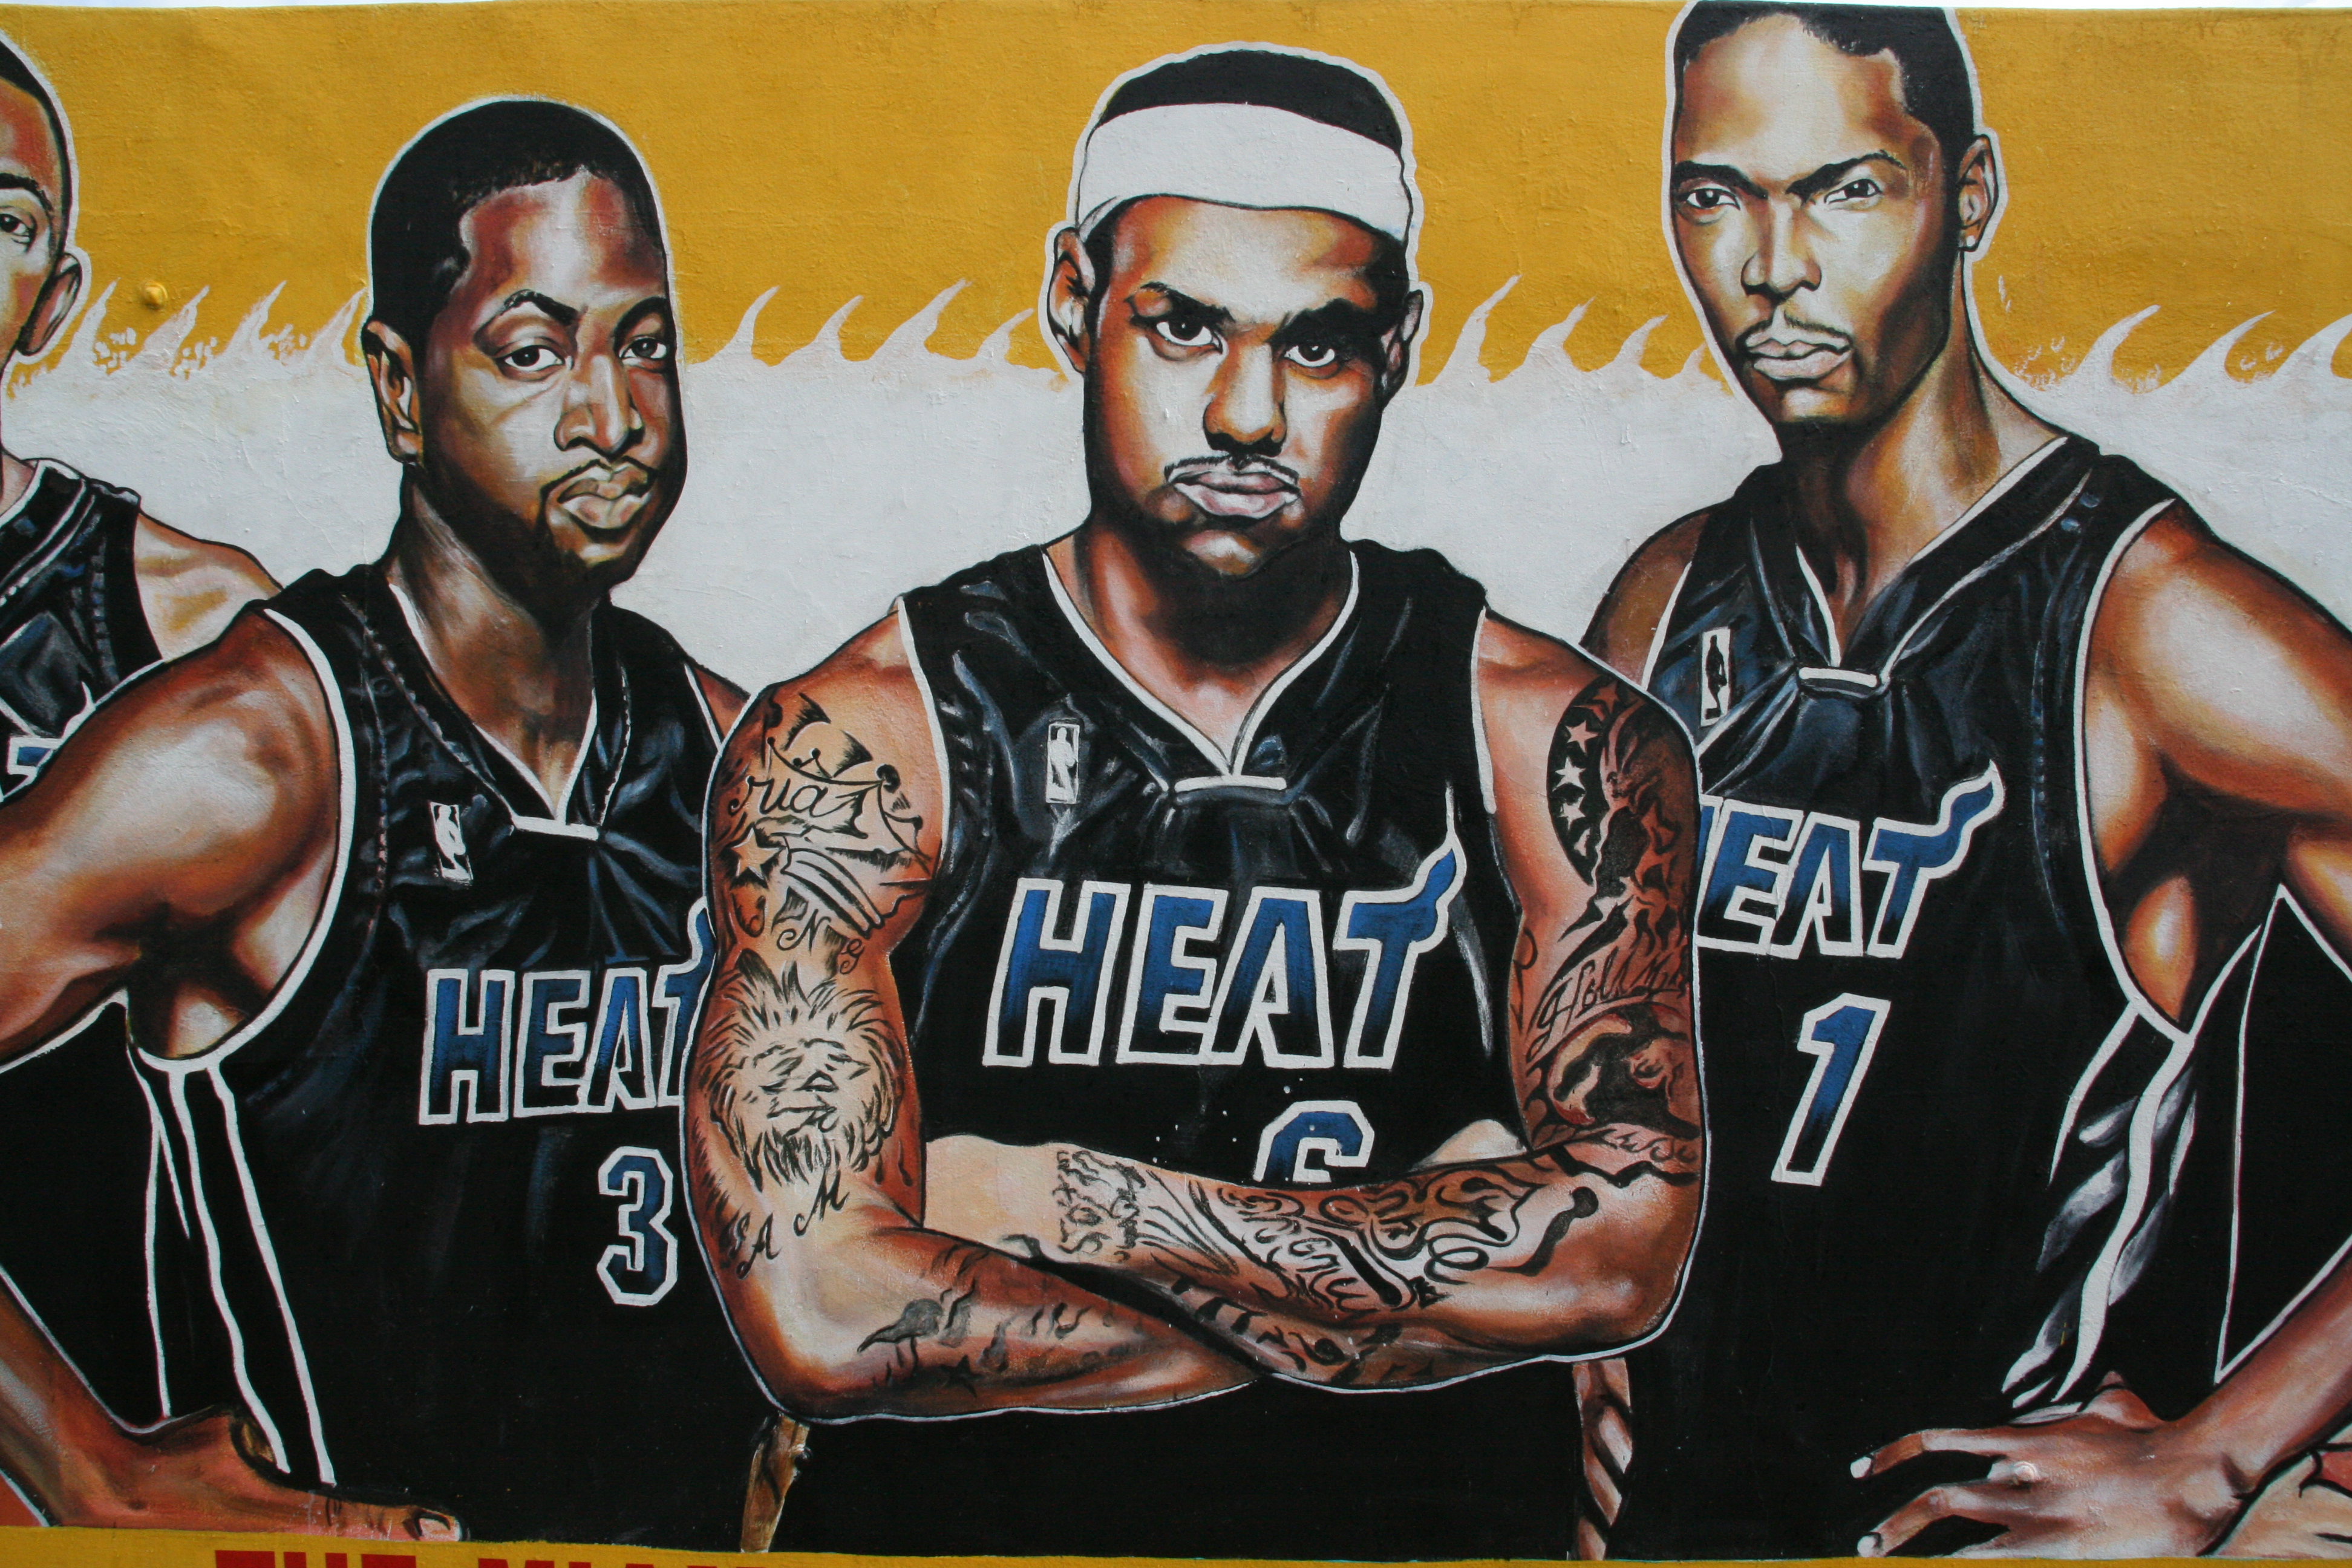 Miami Heat 2012 champions graffiti